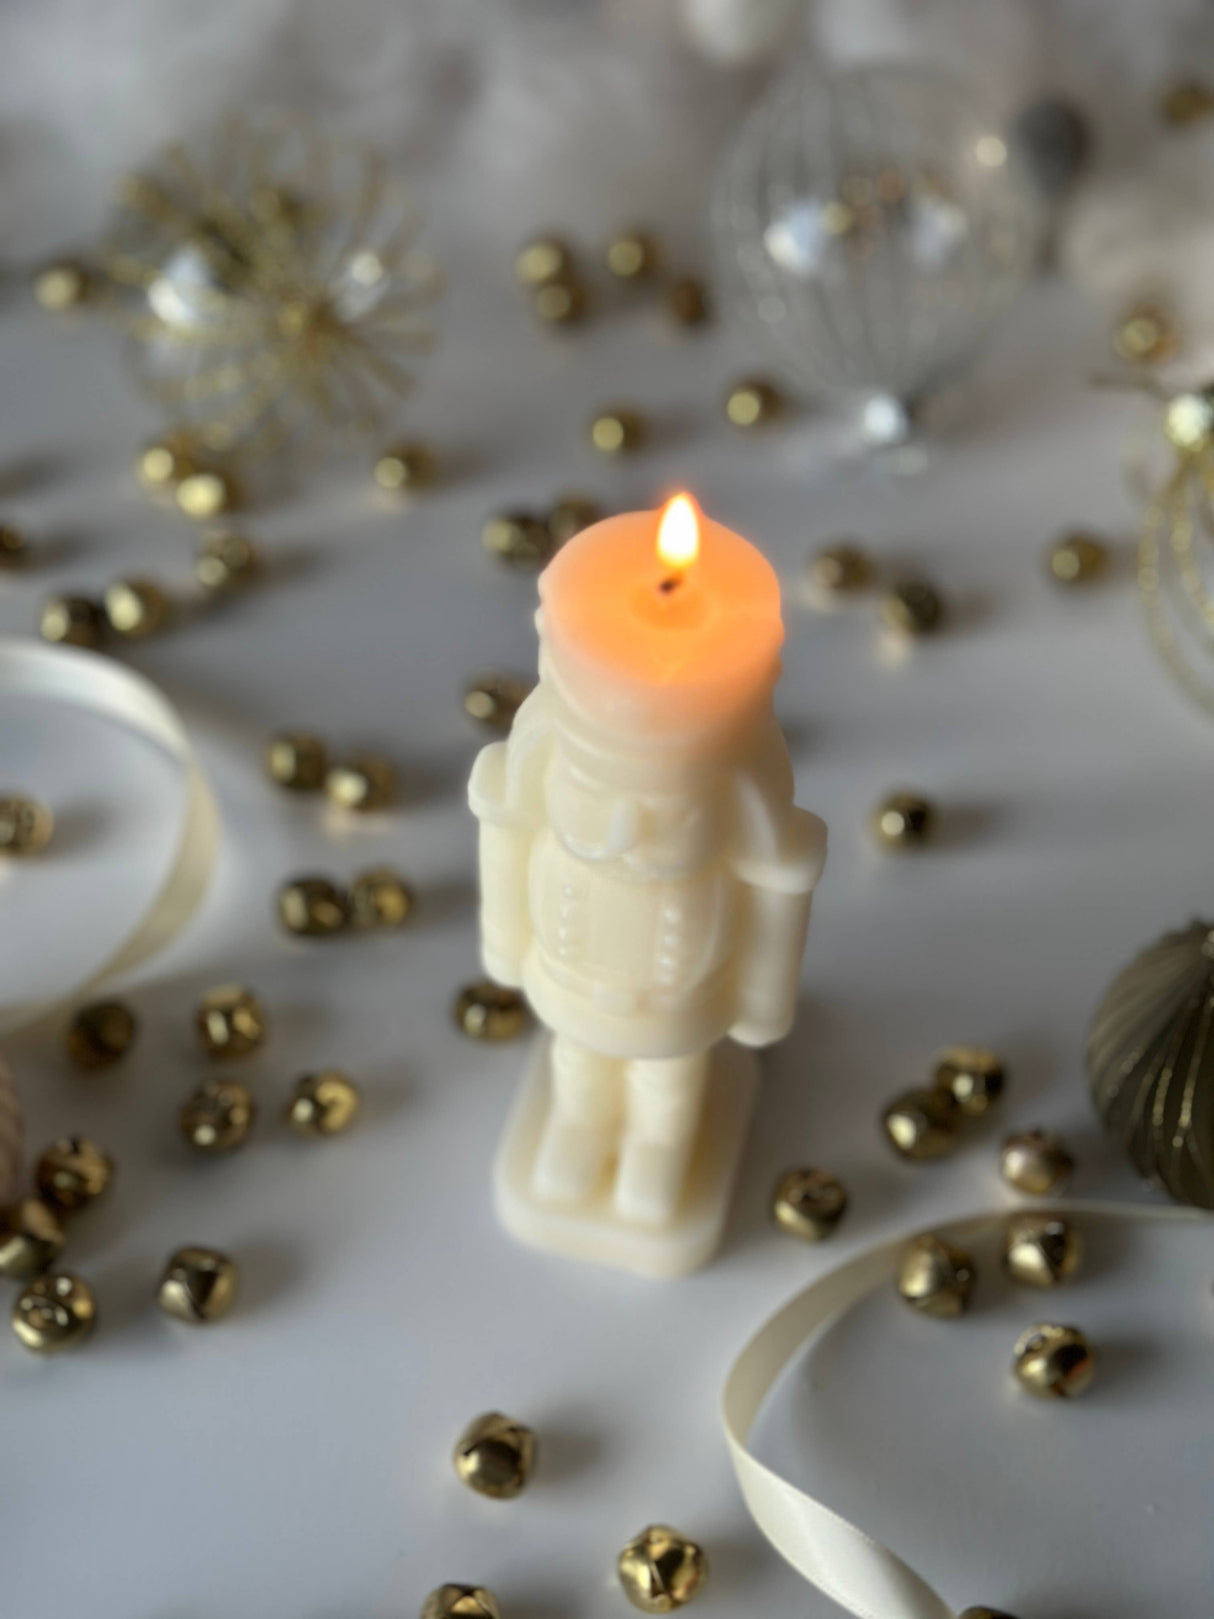 Nutcracker | Holiday Candles | Christmas Home Decor: Christmas Hearth